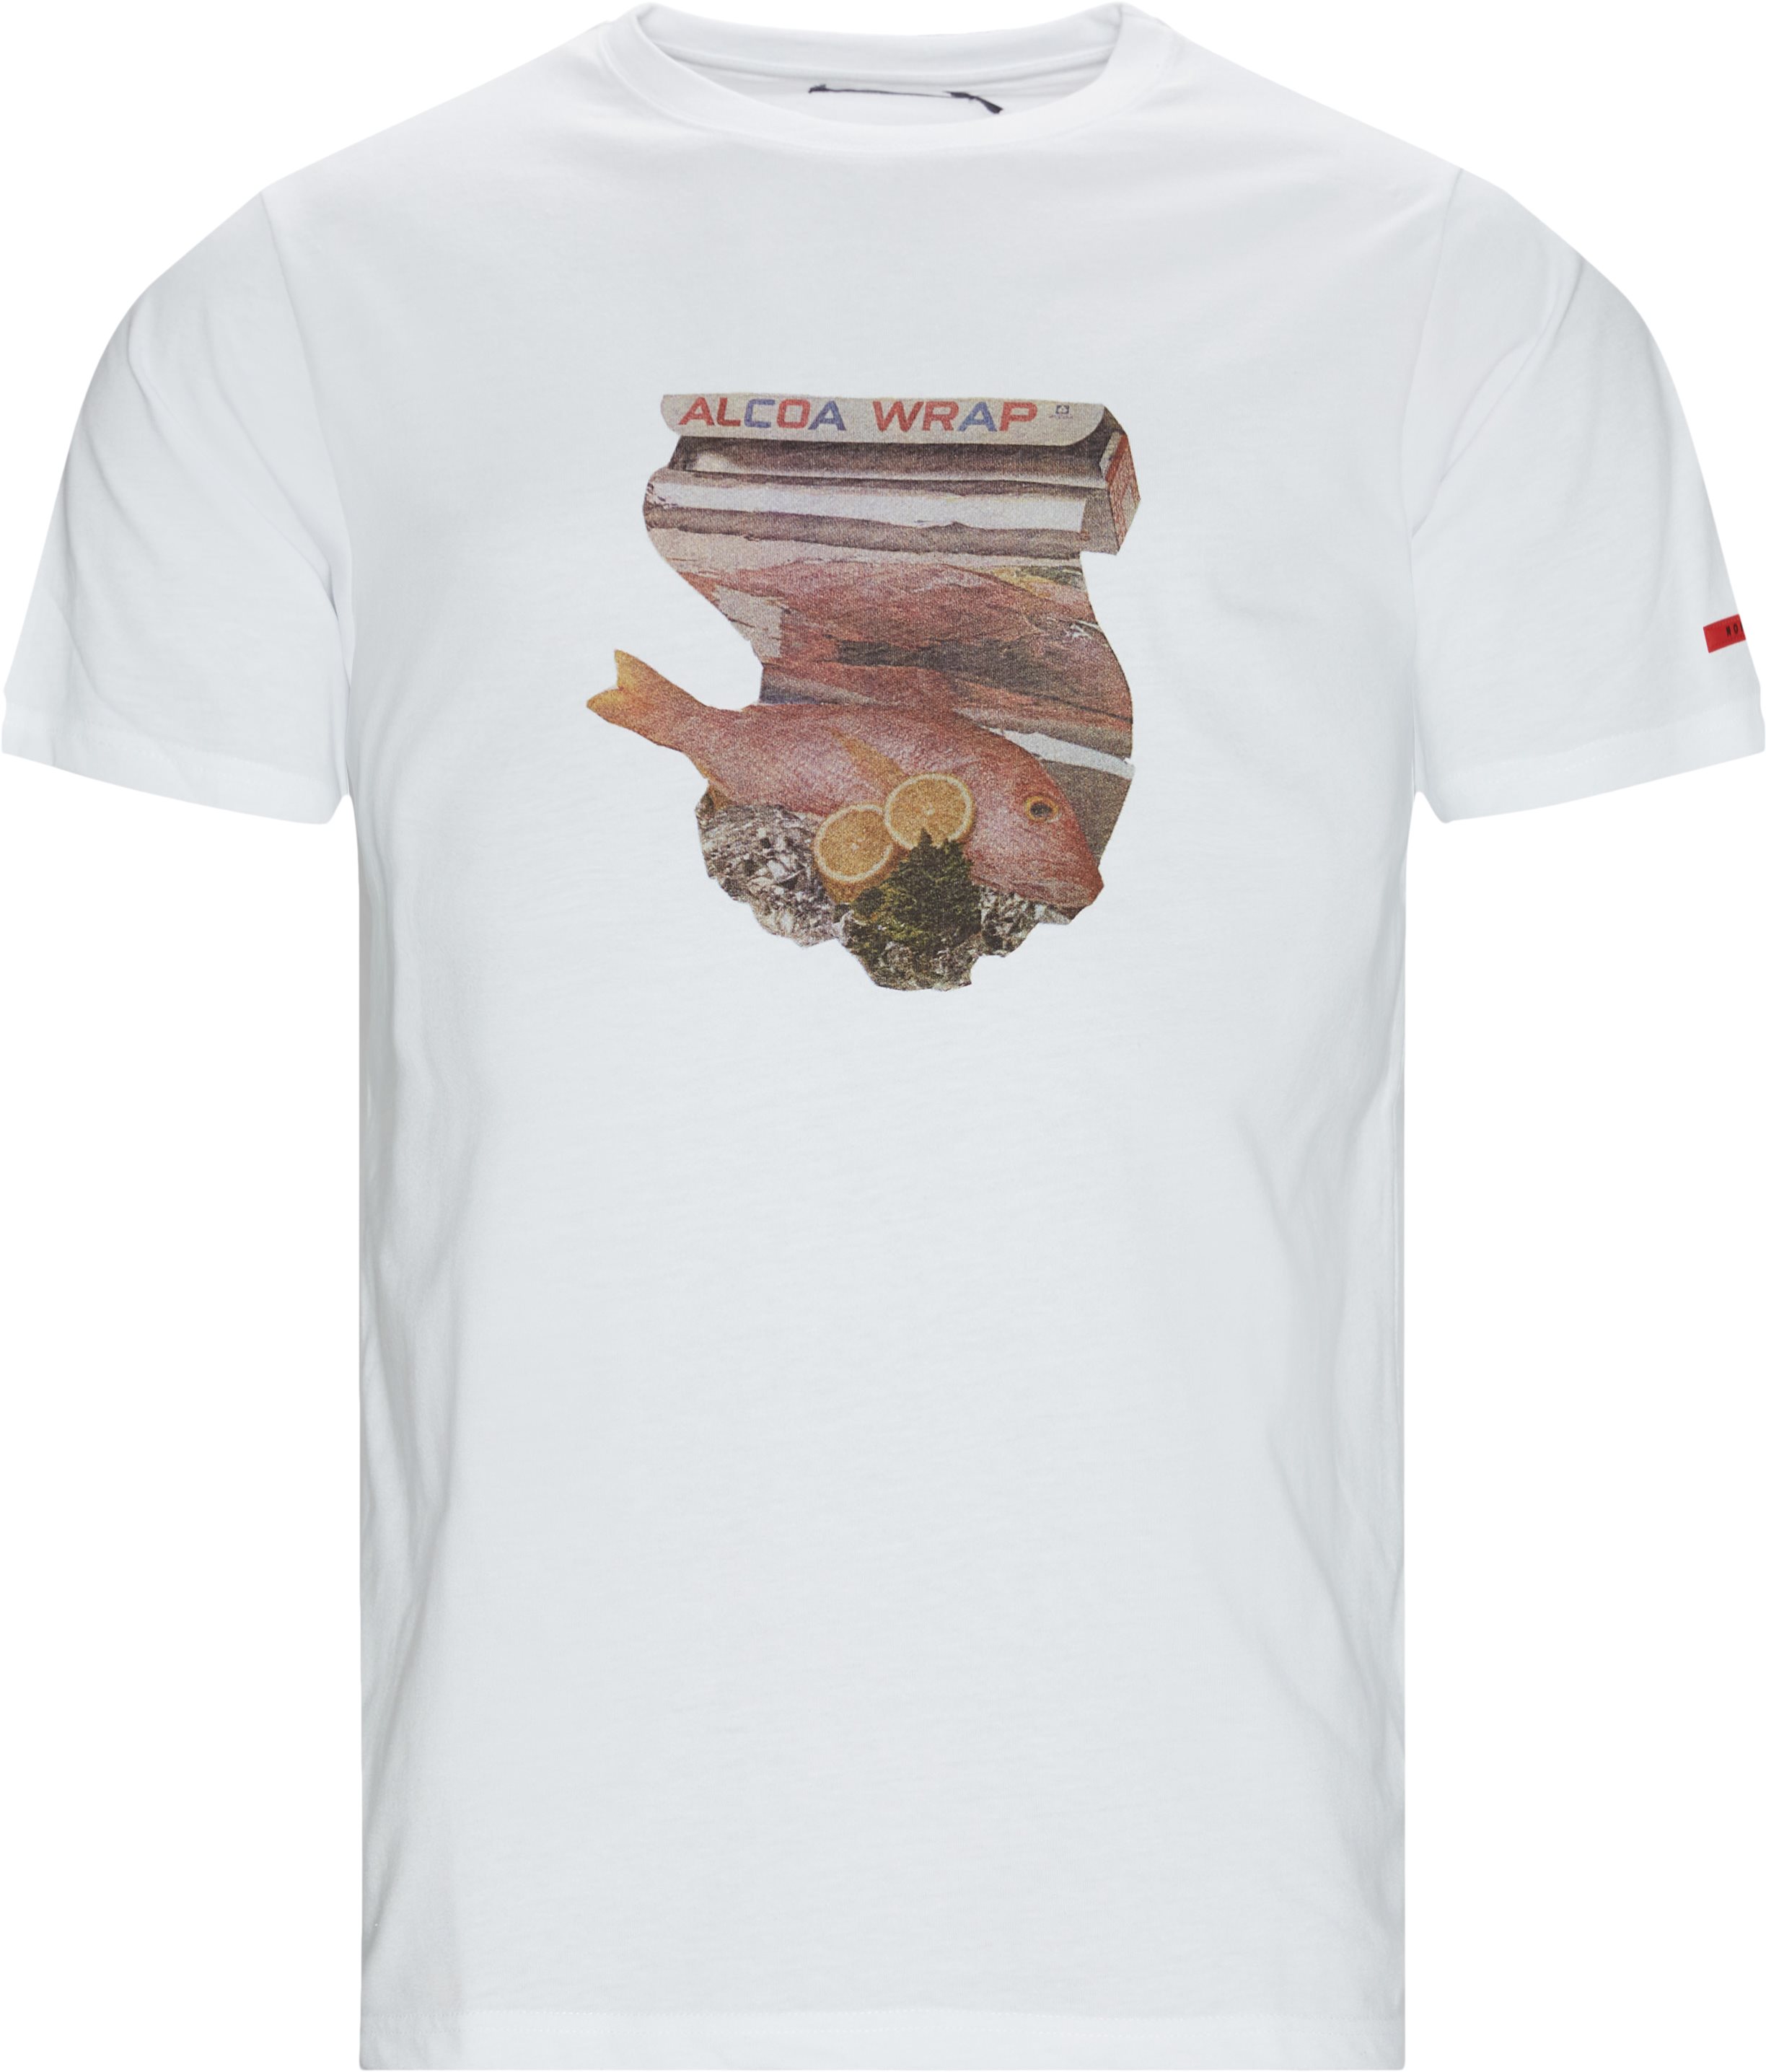 Munster Tee  - T-shirts - Regular fit - Hvid